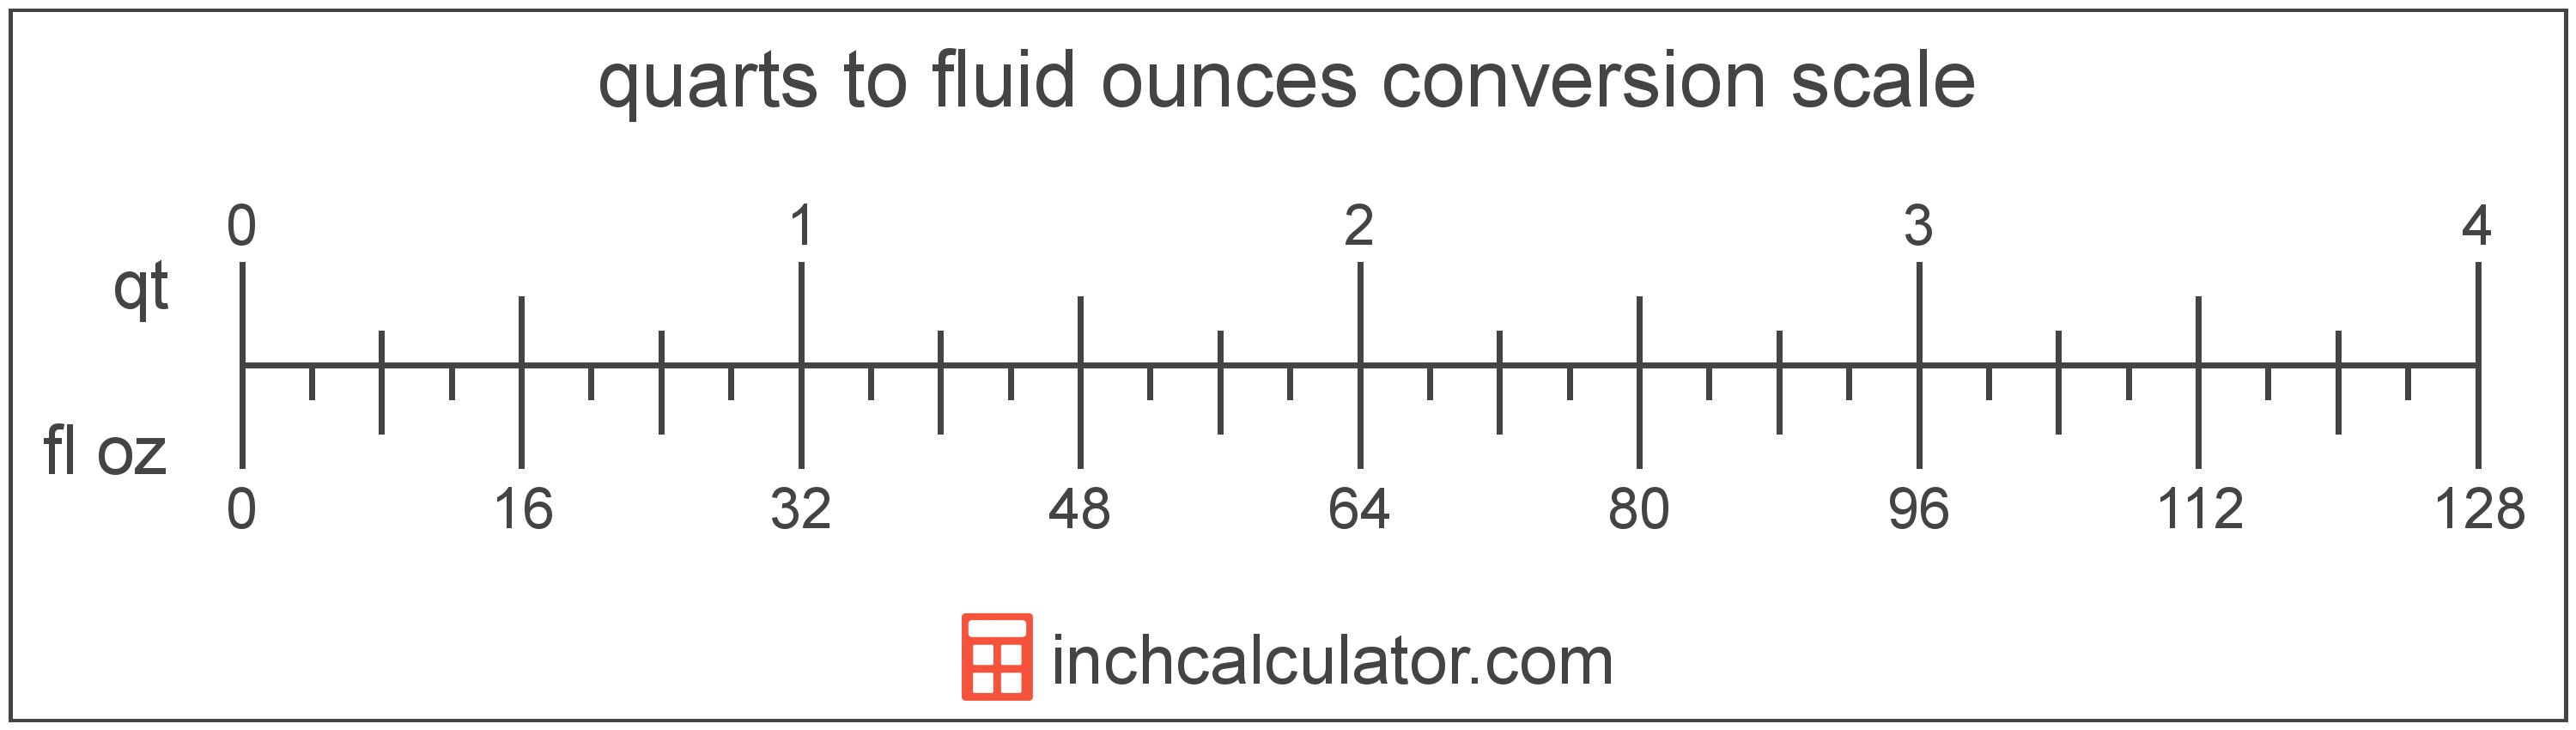 conversion scale showing quarts and equivalent fluid ounces volume values